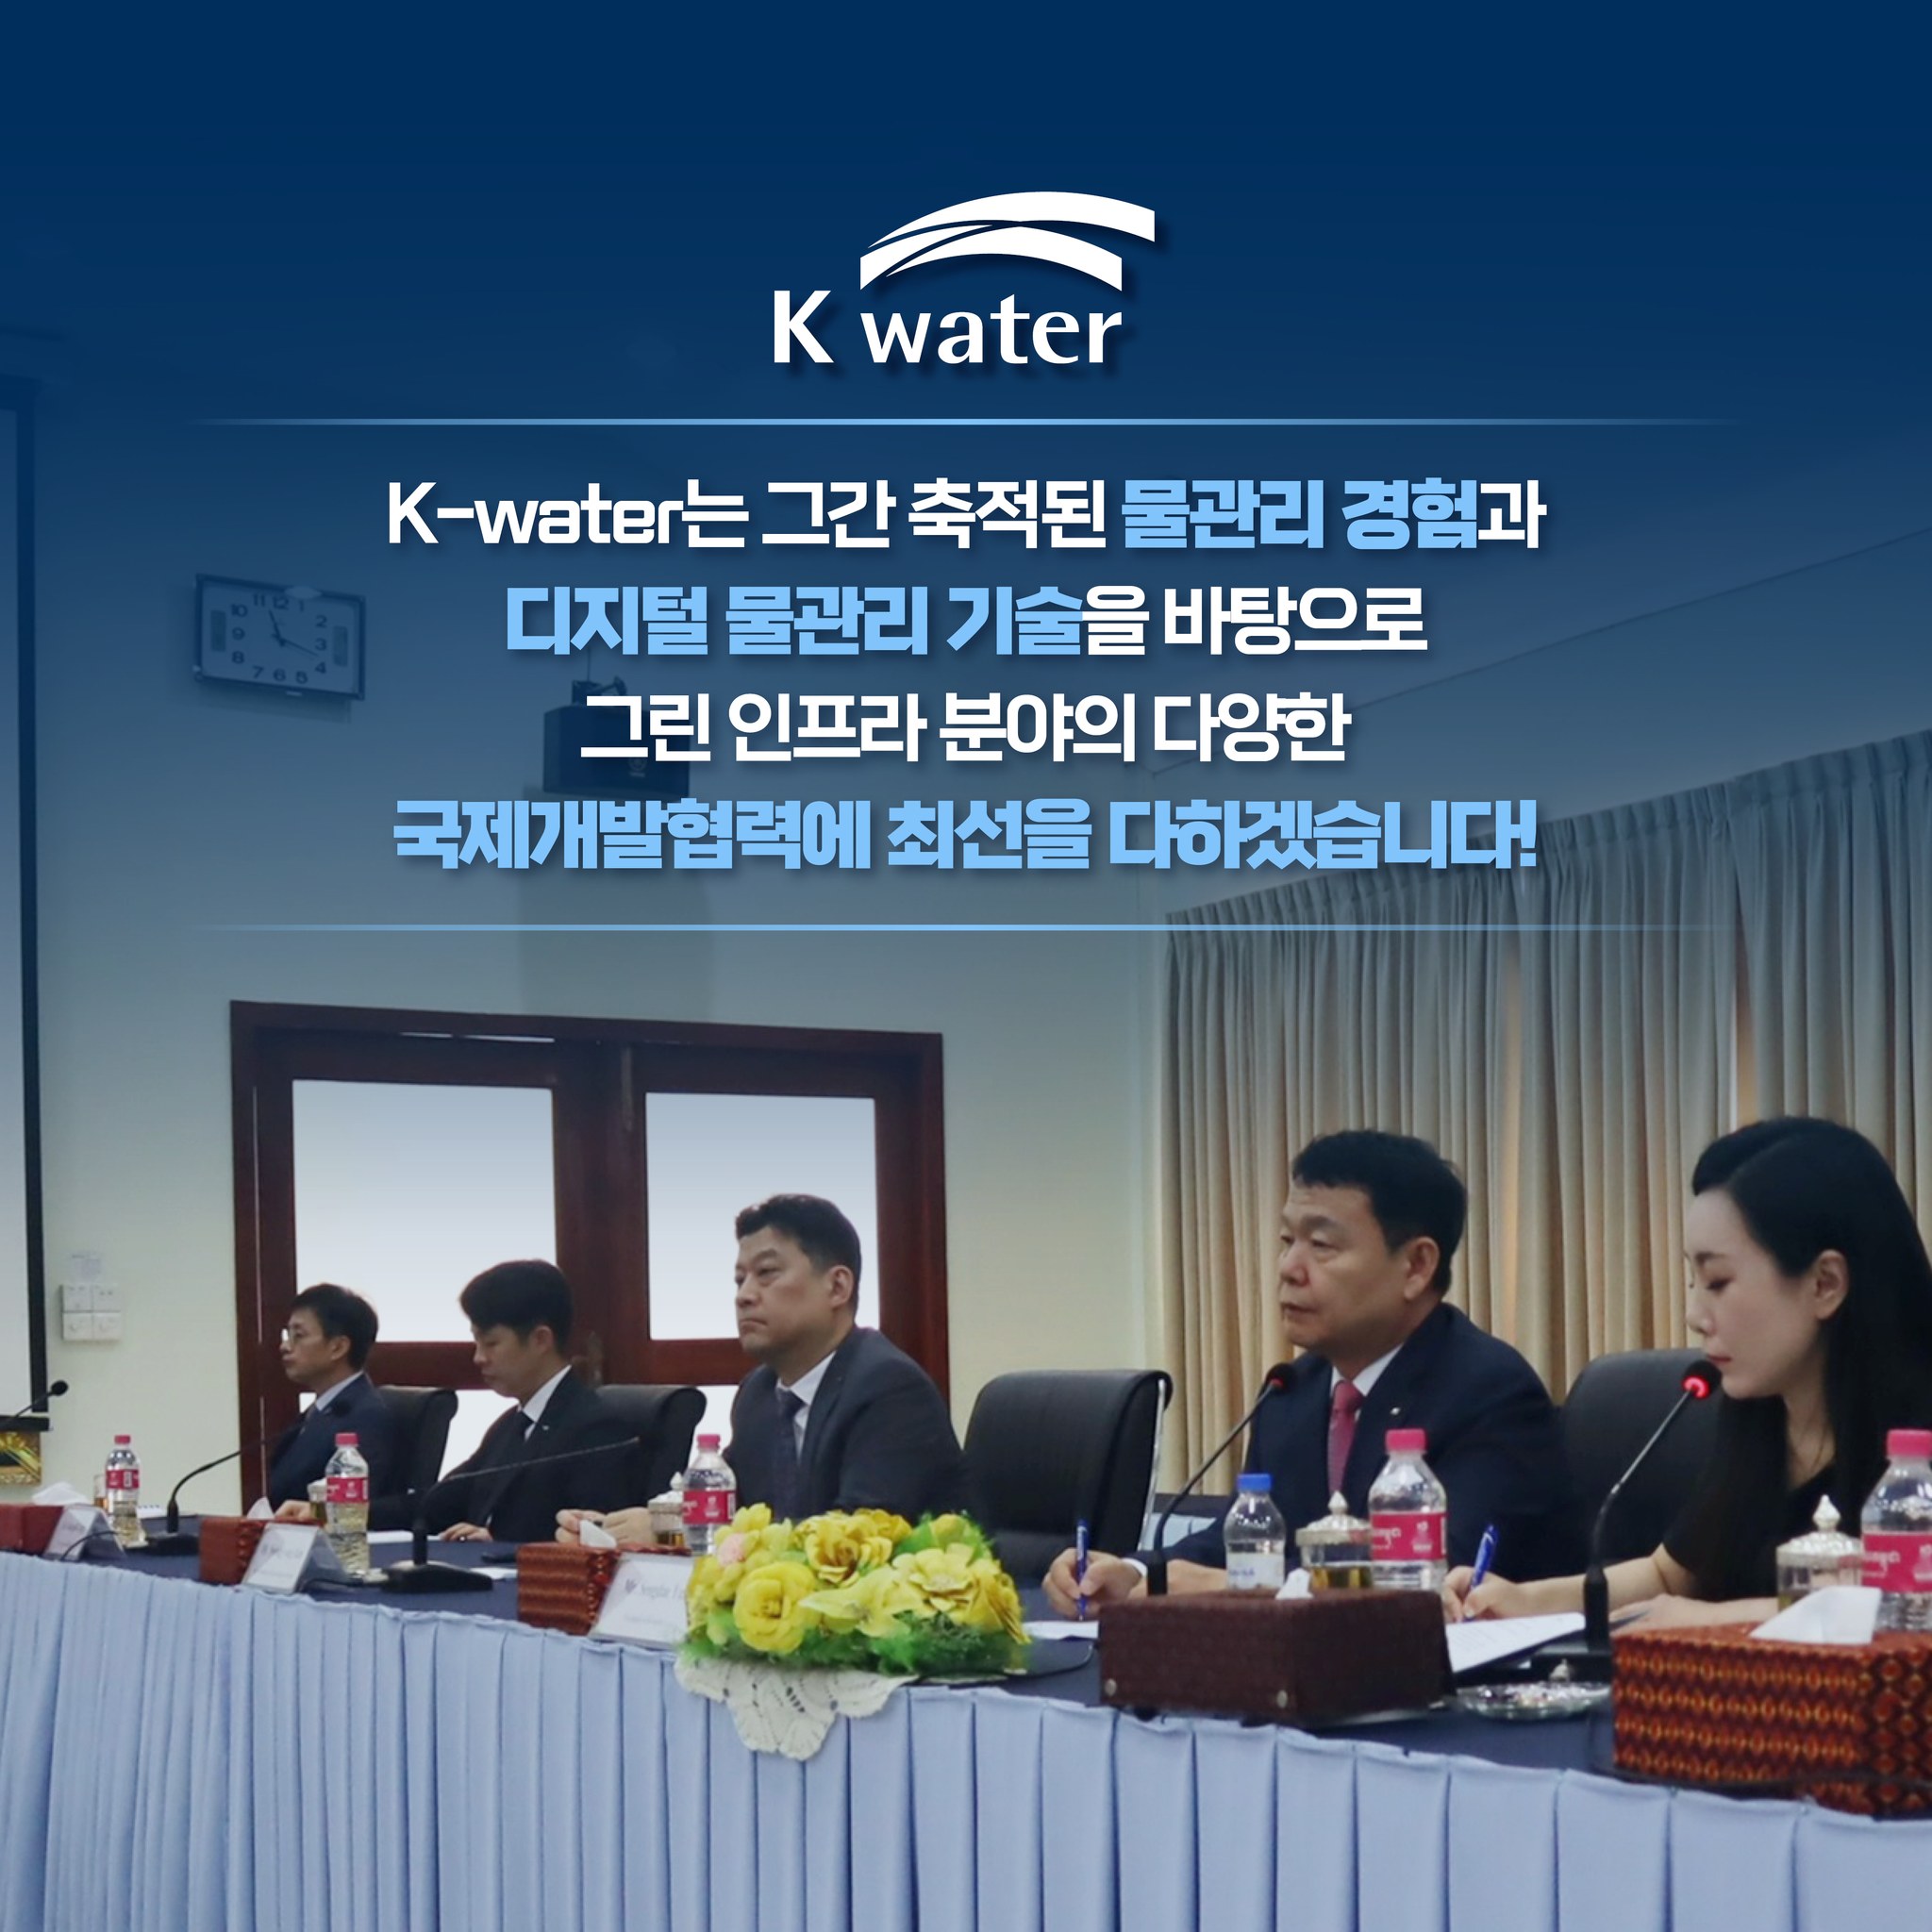 K-water는 그간 축적된 물관리 경험과 디지털 물관리 기술을 바탕으로 그린 인프라 분야의 다양한 국제개발협력에 최선을 다하겠습니다.